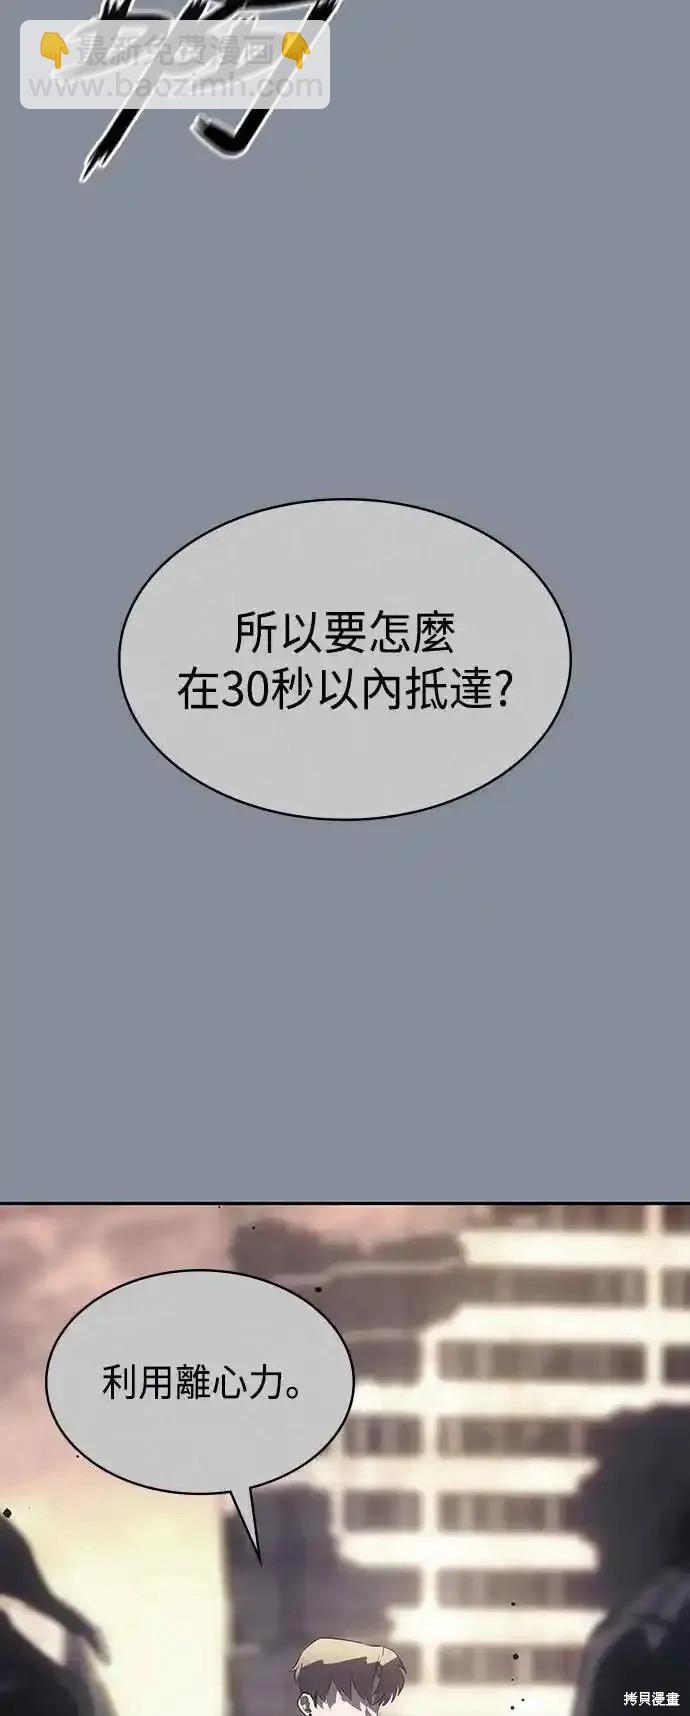 7FATES CHAKHO - 第50話(1/2) - 5